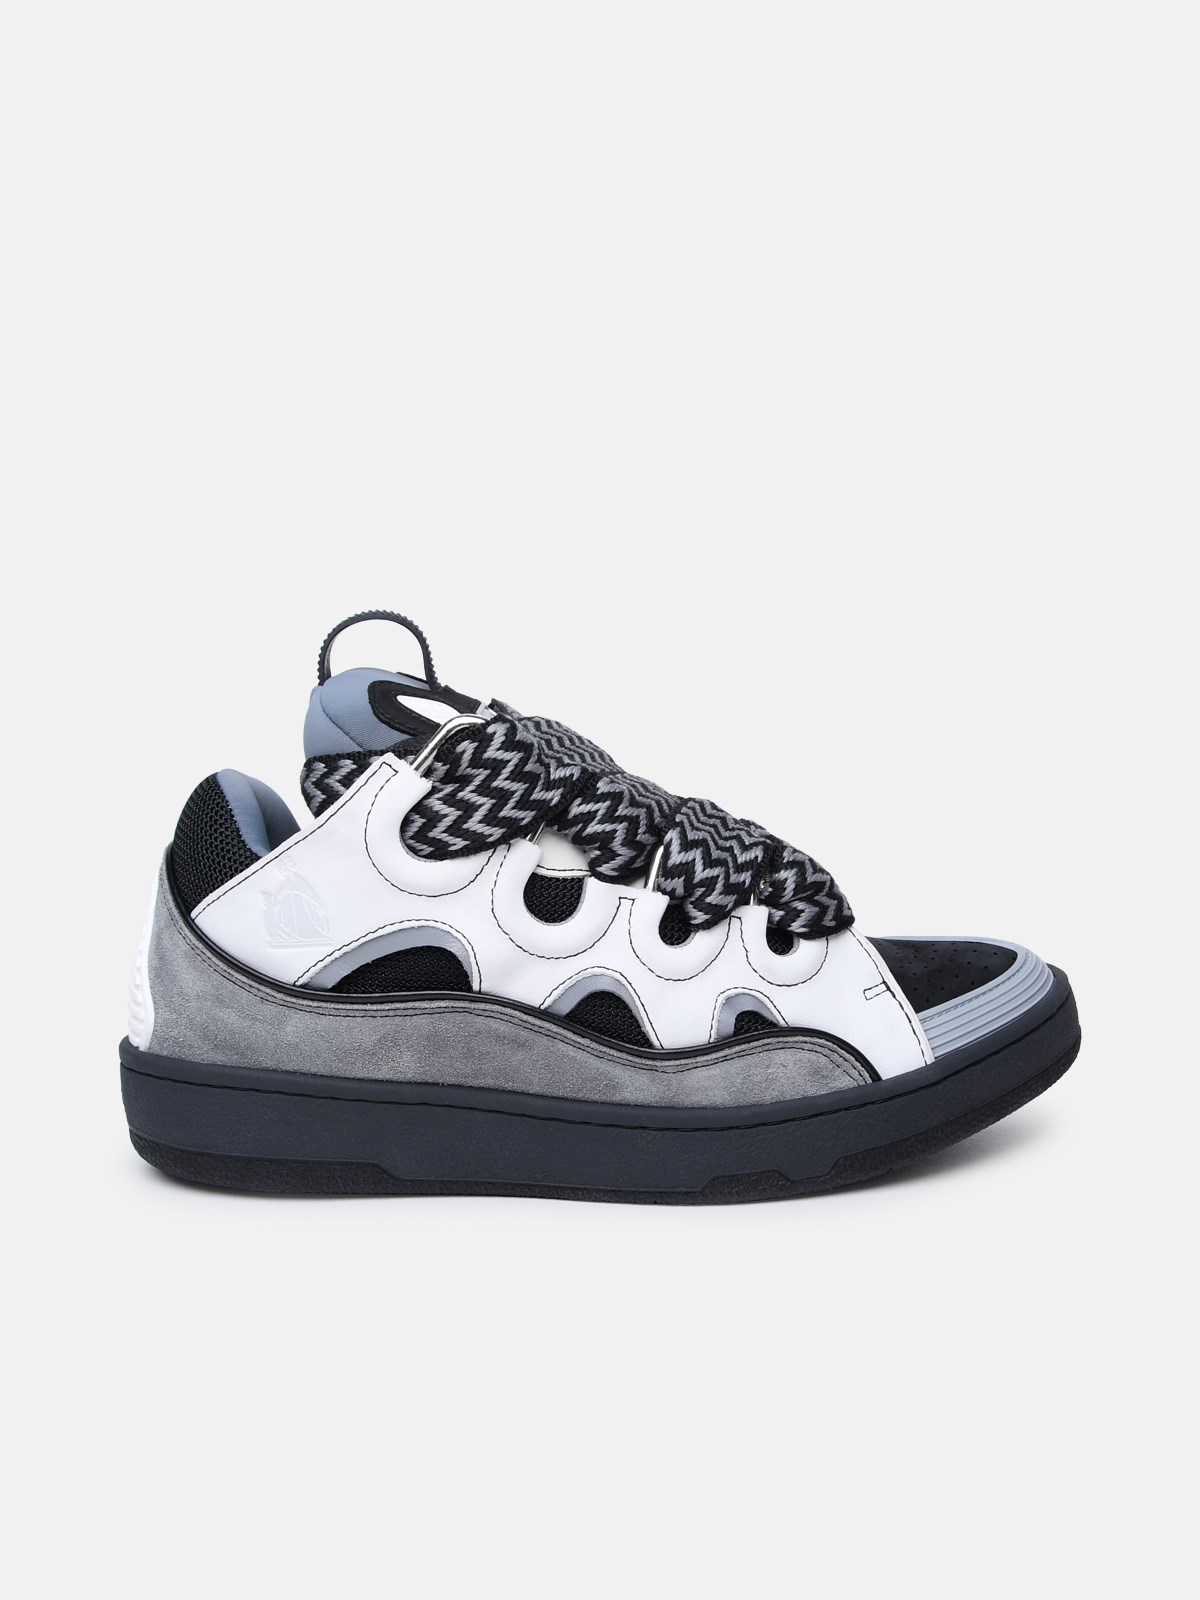 Lanvin Multicolor Leather Sneakers In Grey